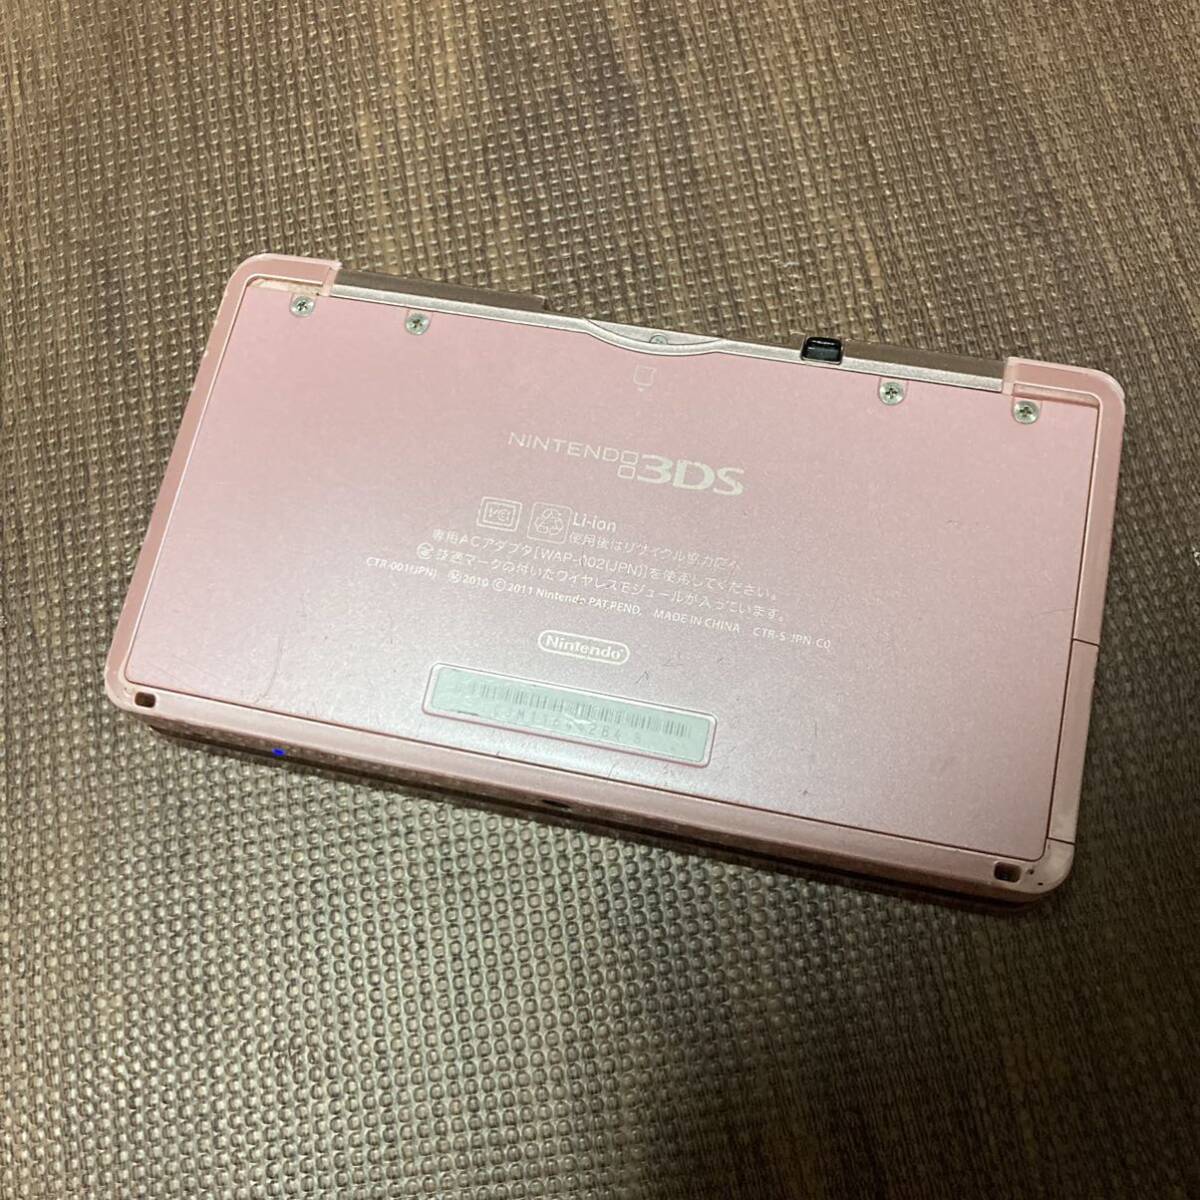  Nintendo Nintendo 3DS Misty pink electrification has confirmed 